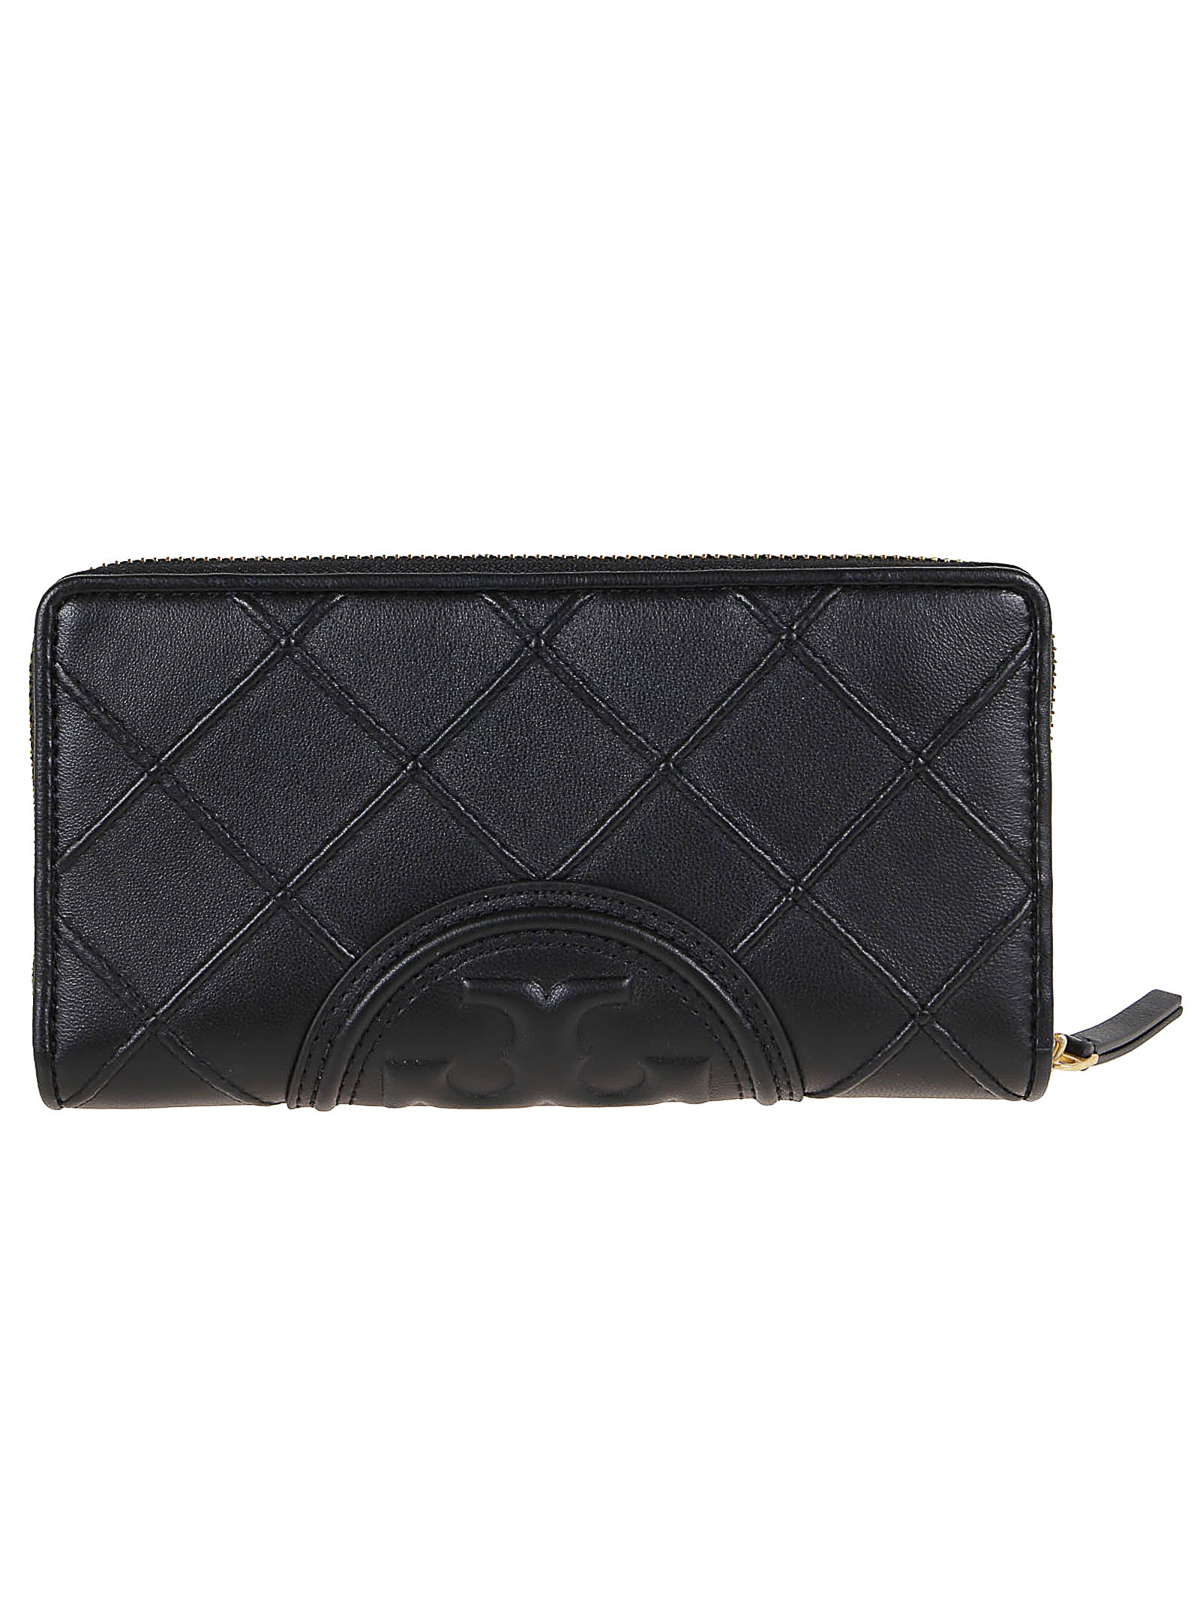 Tory Burch Women's Fleming Leather Wallet Bag - Gray - Wallets